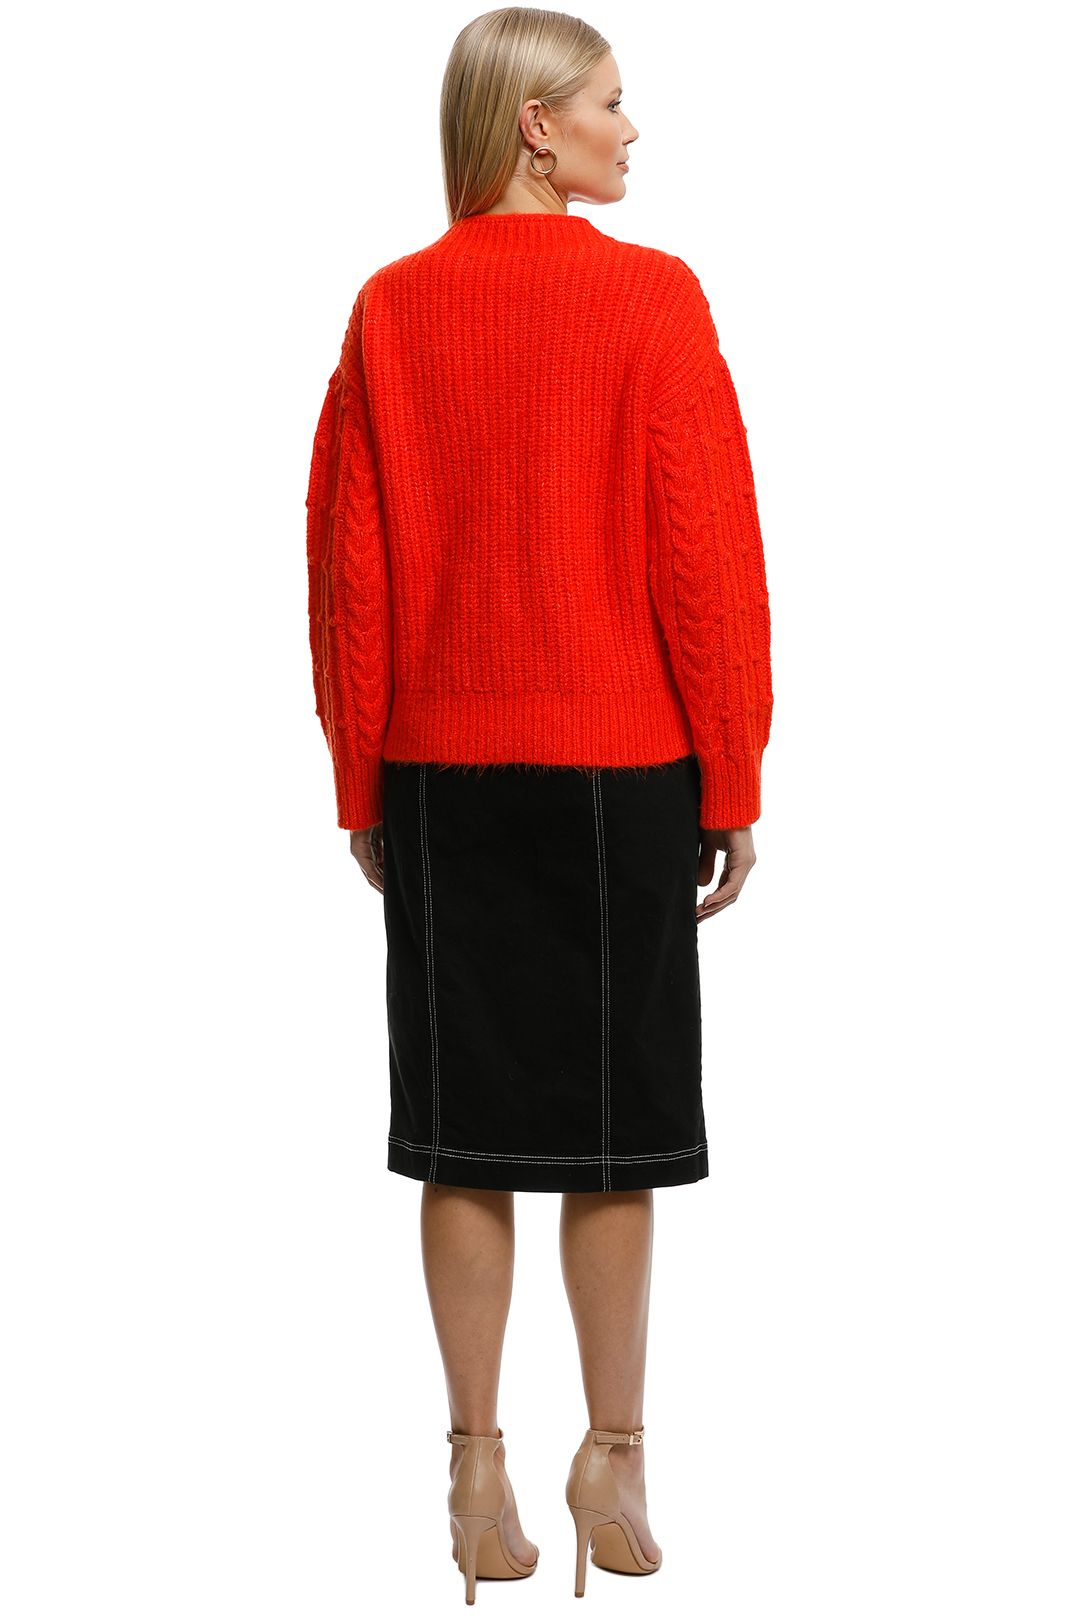 MNG - Contrasting Knit Sweater - Orange - Back